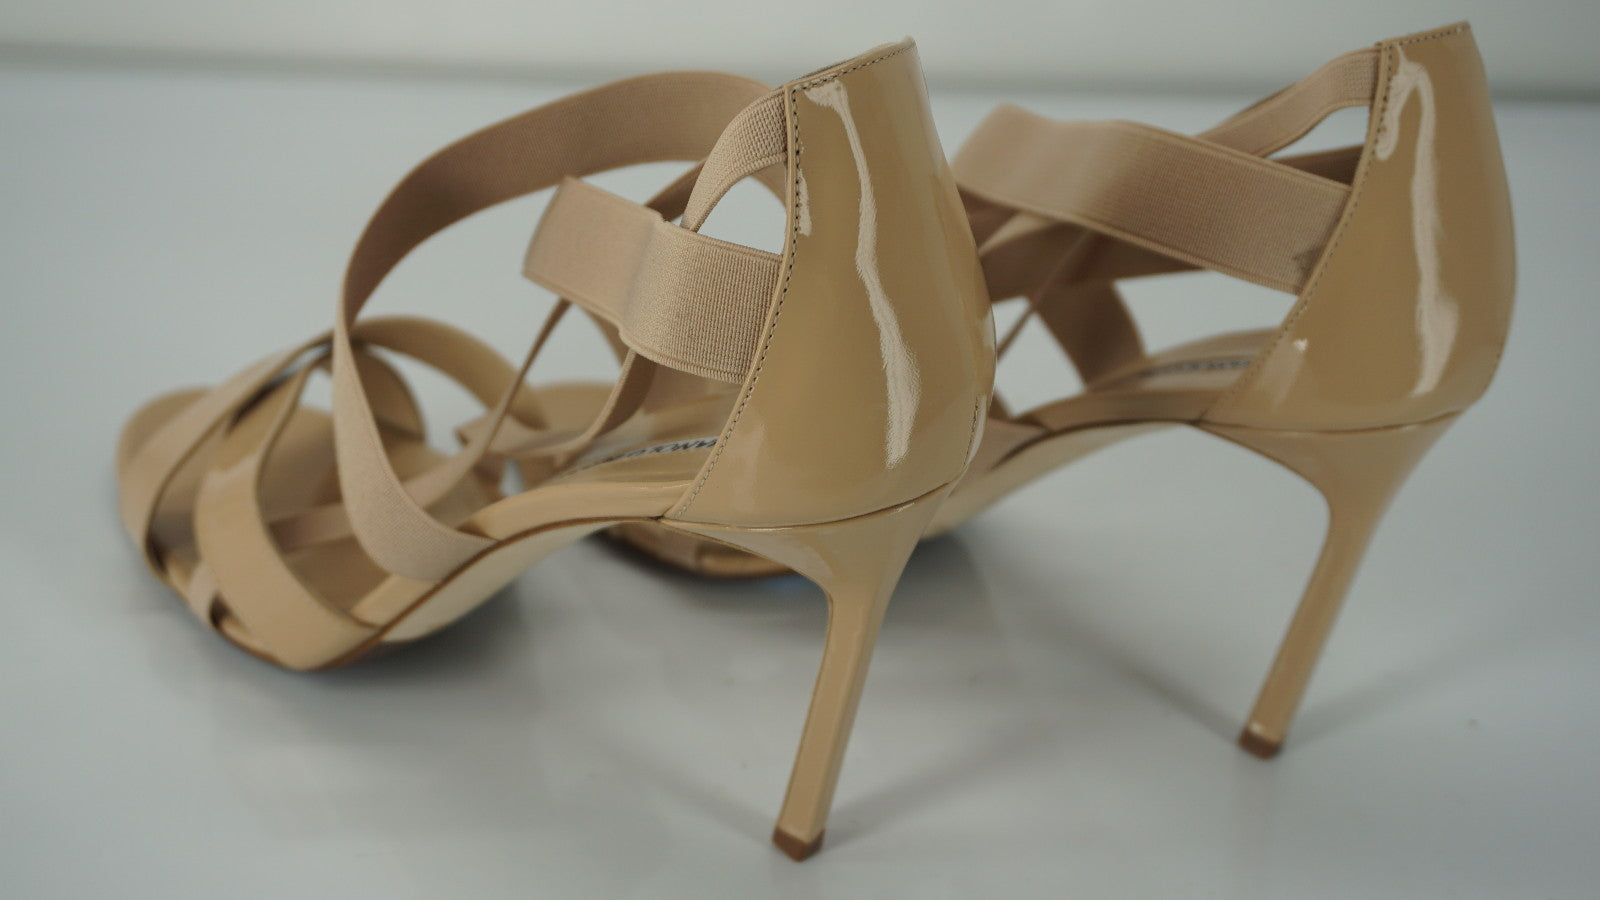 Manolo Blahnik Nude Patent Eletti Open Toe Strappy Sandals Size 39.5 New $745 Sz